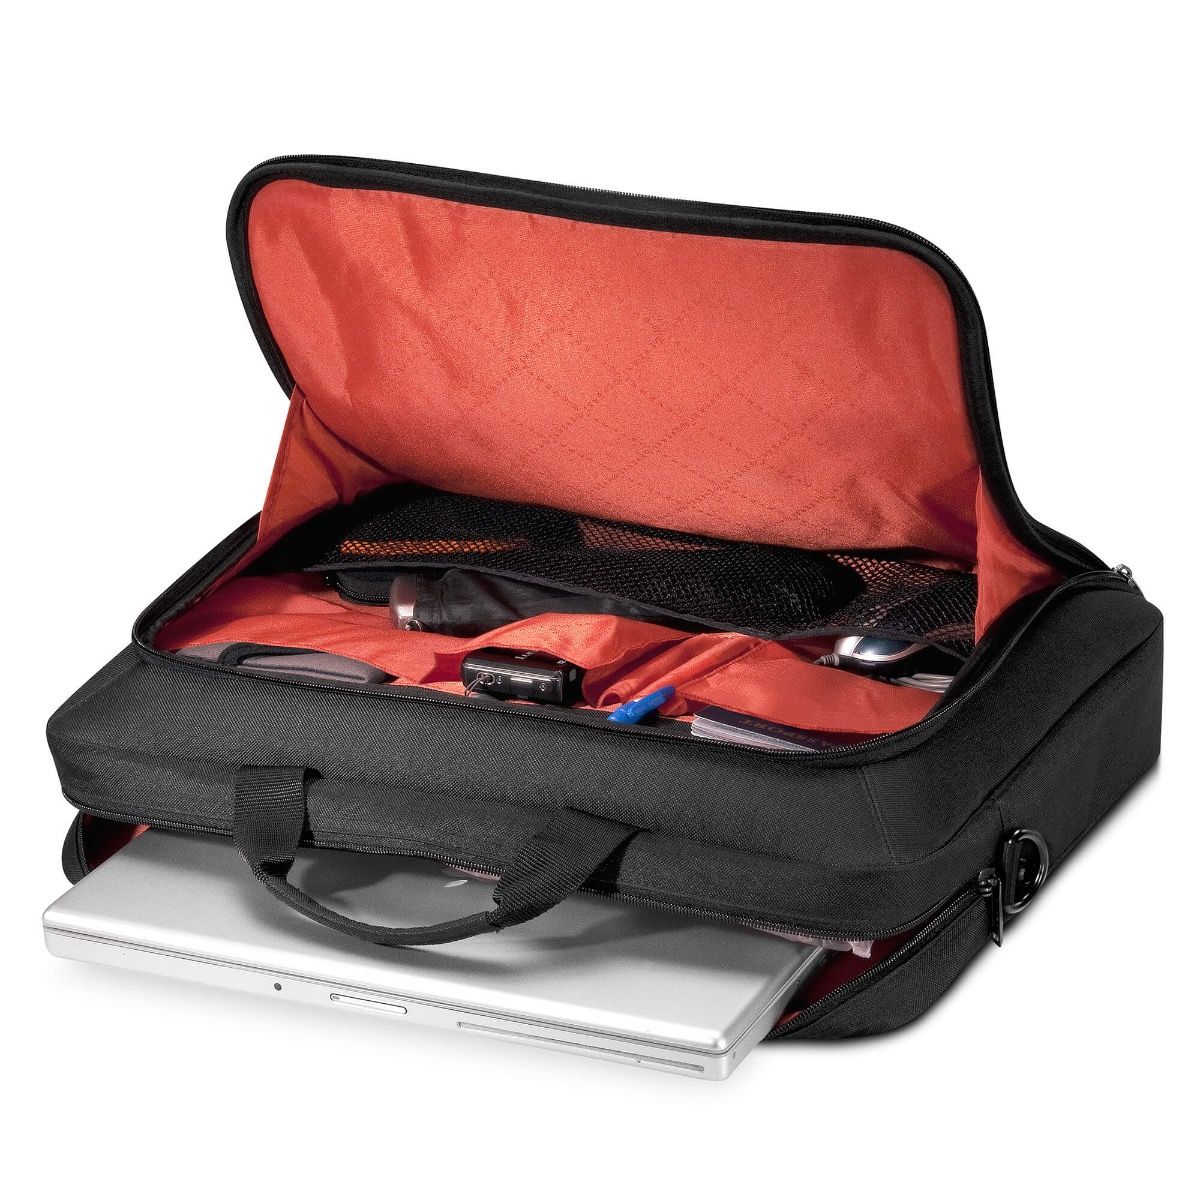 Everki 18.4" Advance Compact Laptop Bag